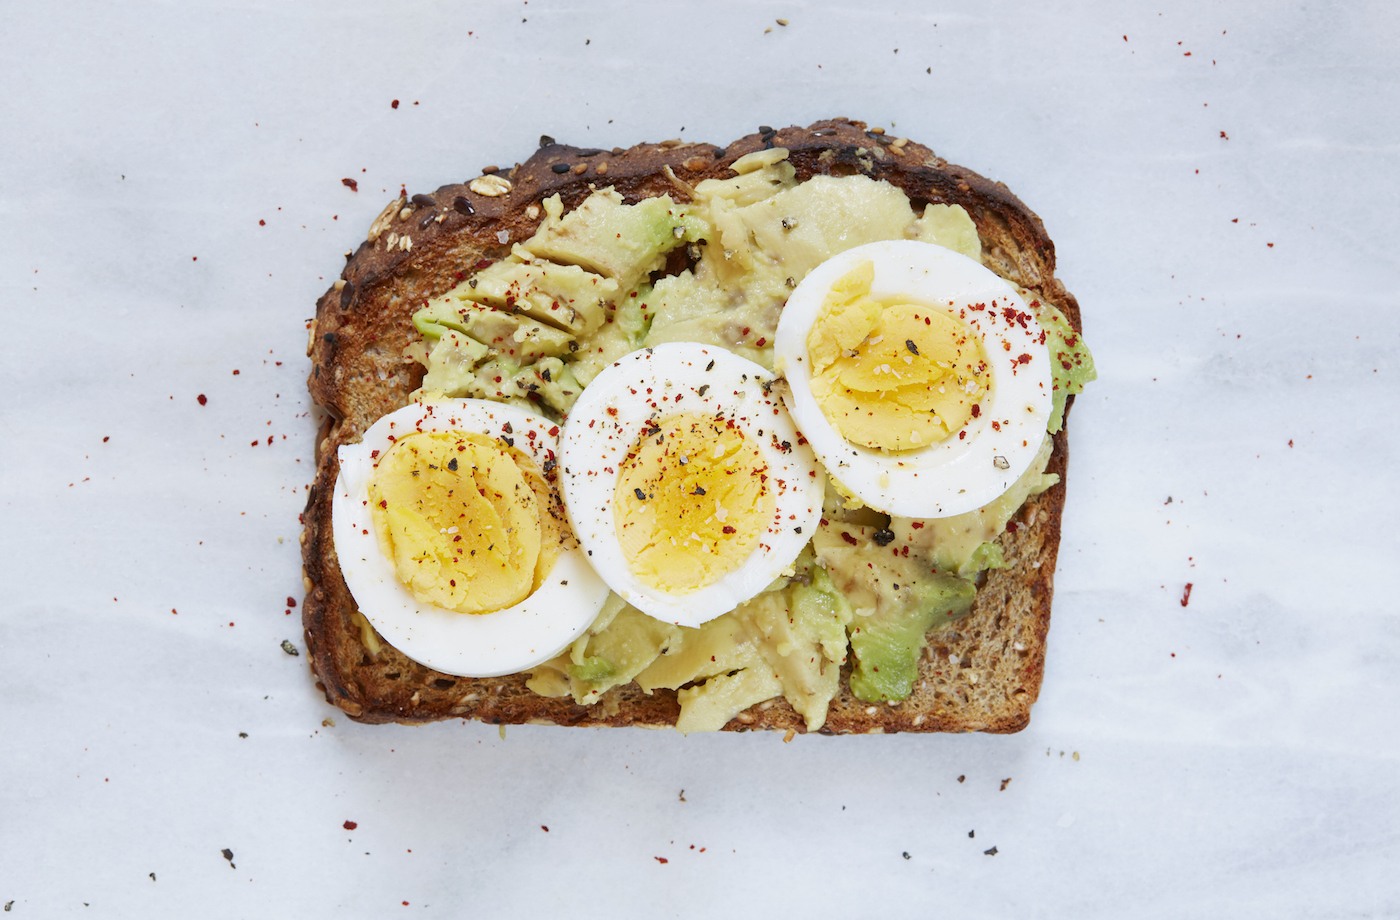 Avocado and egg, a high fiber breakfast for gut health